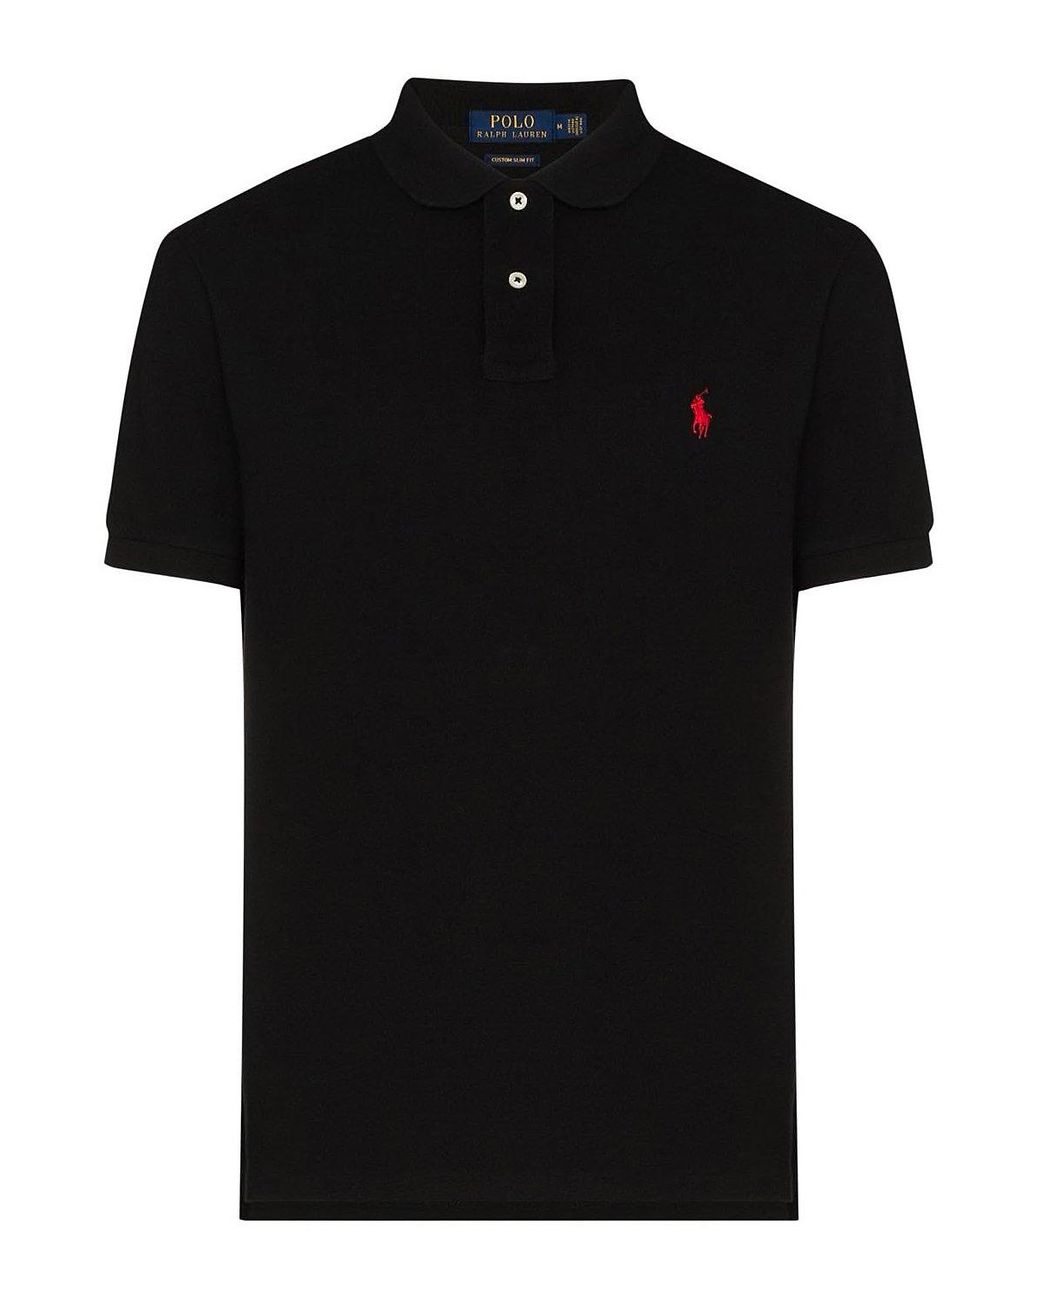 Polo Ralph Lauren Classic Polo Shirt in Black for Men - Lyst